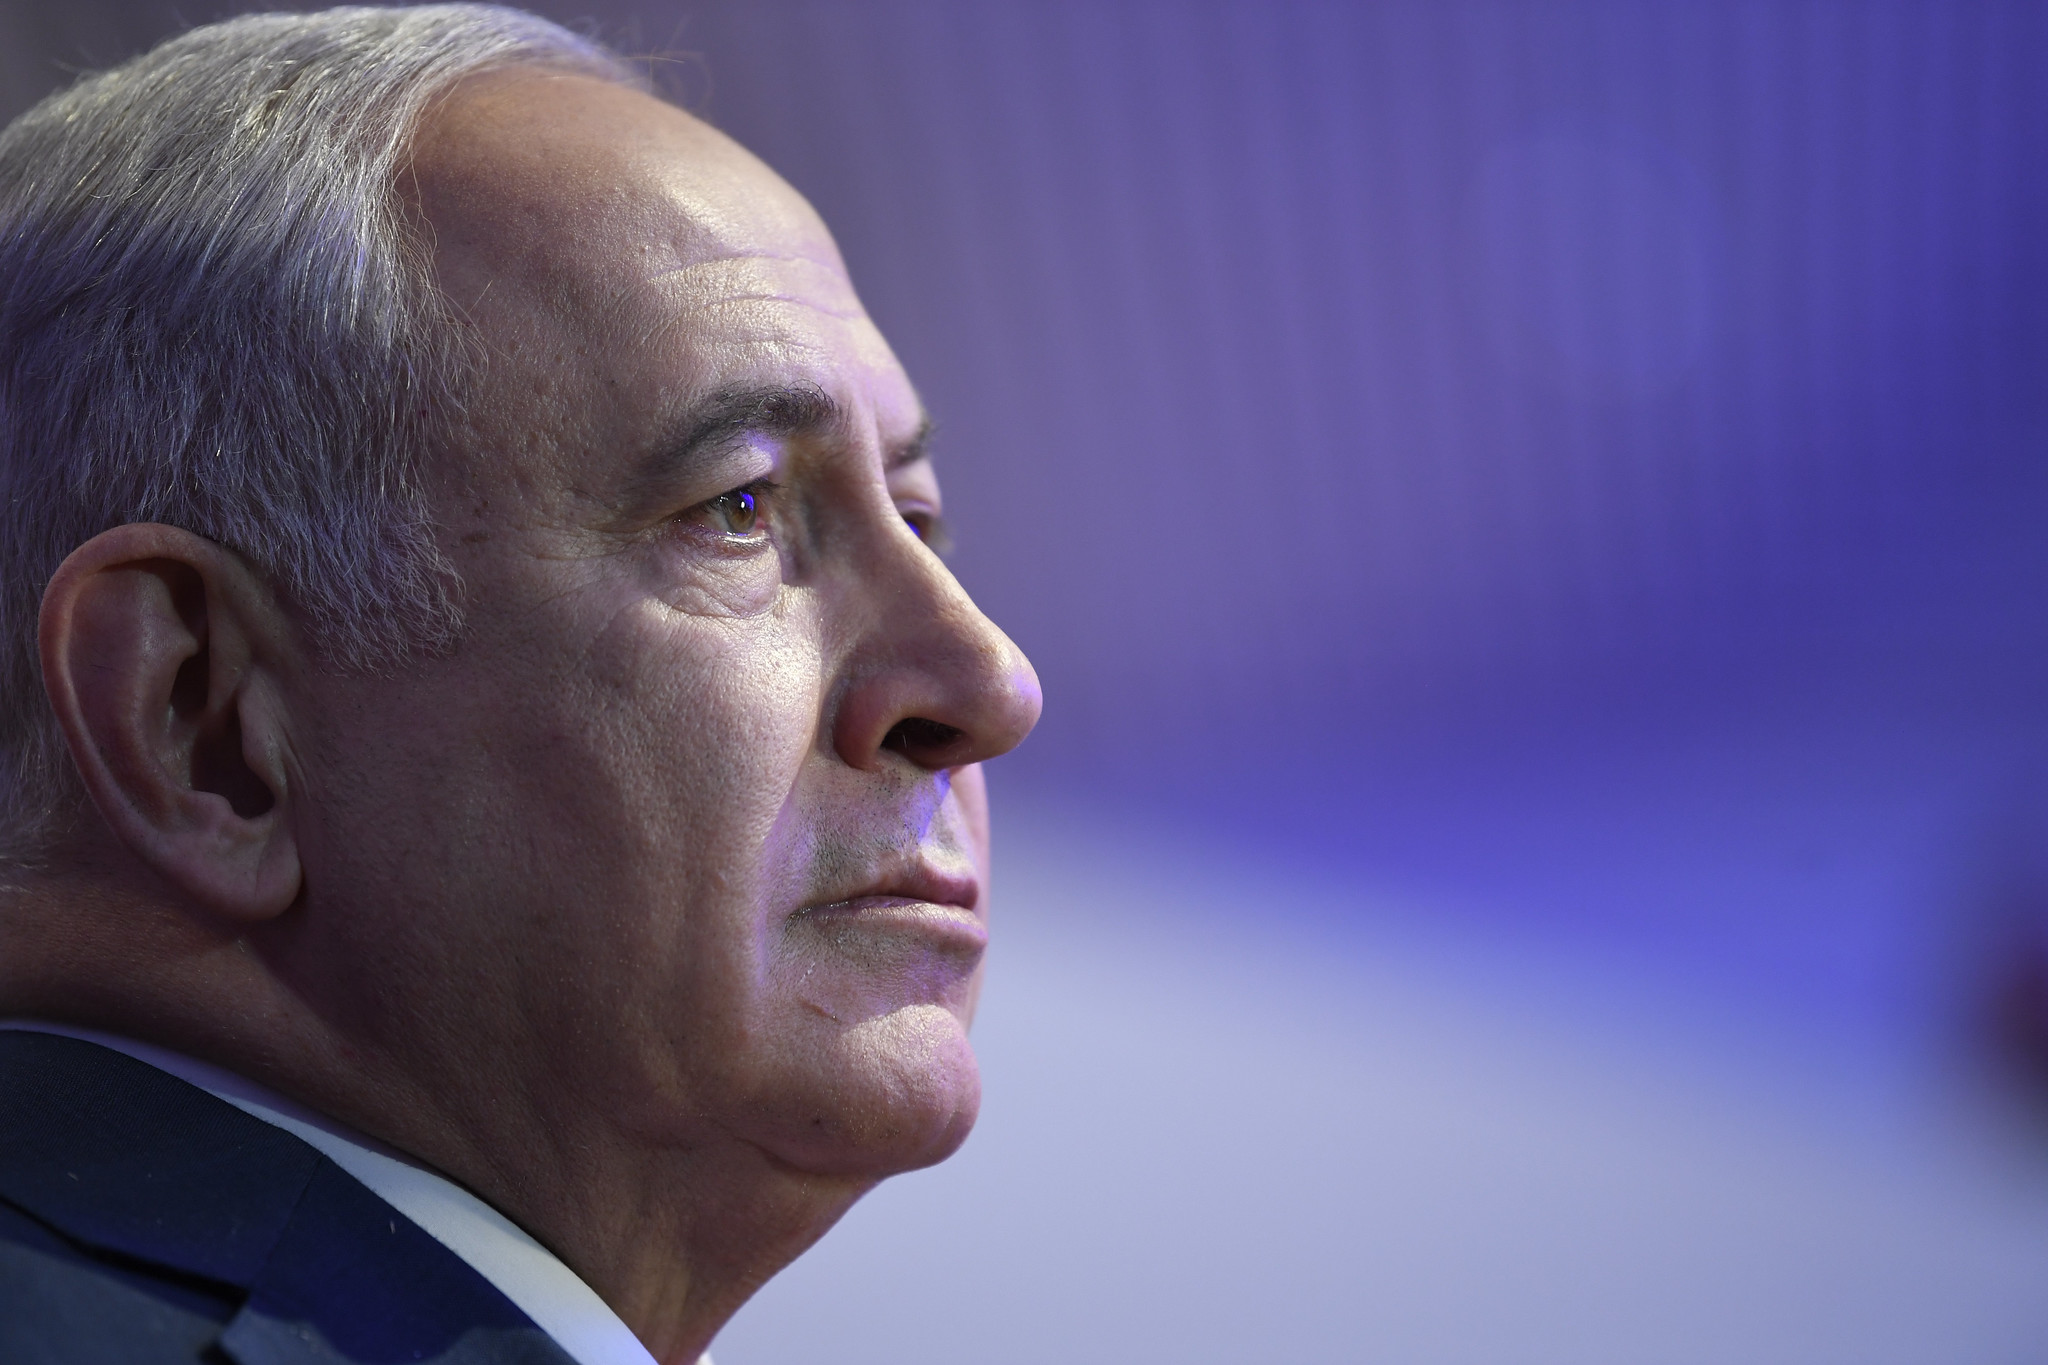 Netanyahu Image World Economic Forum Flickr